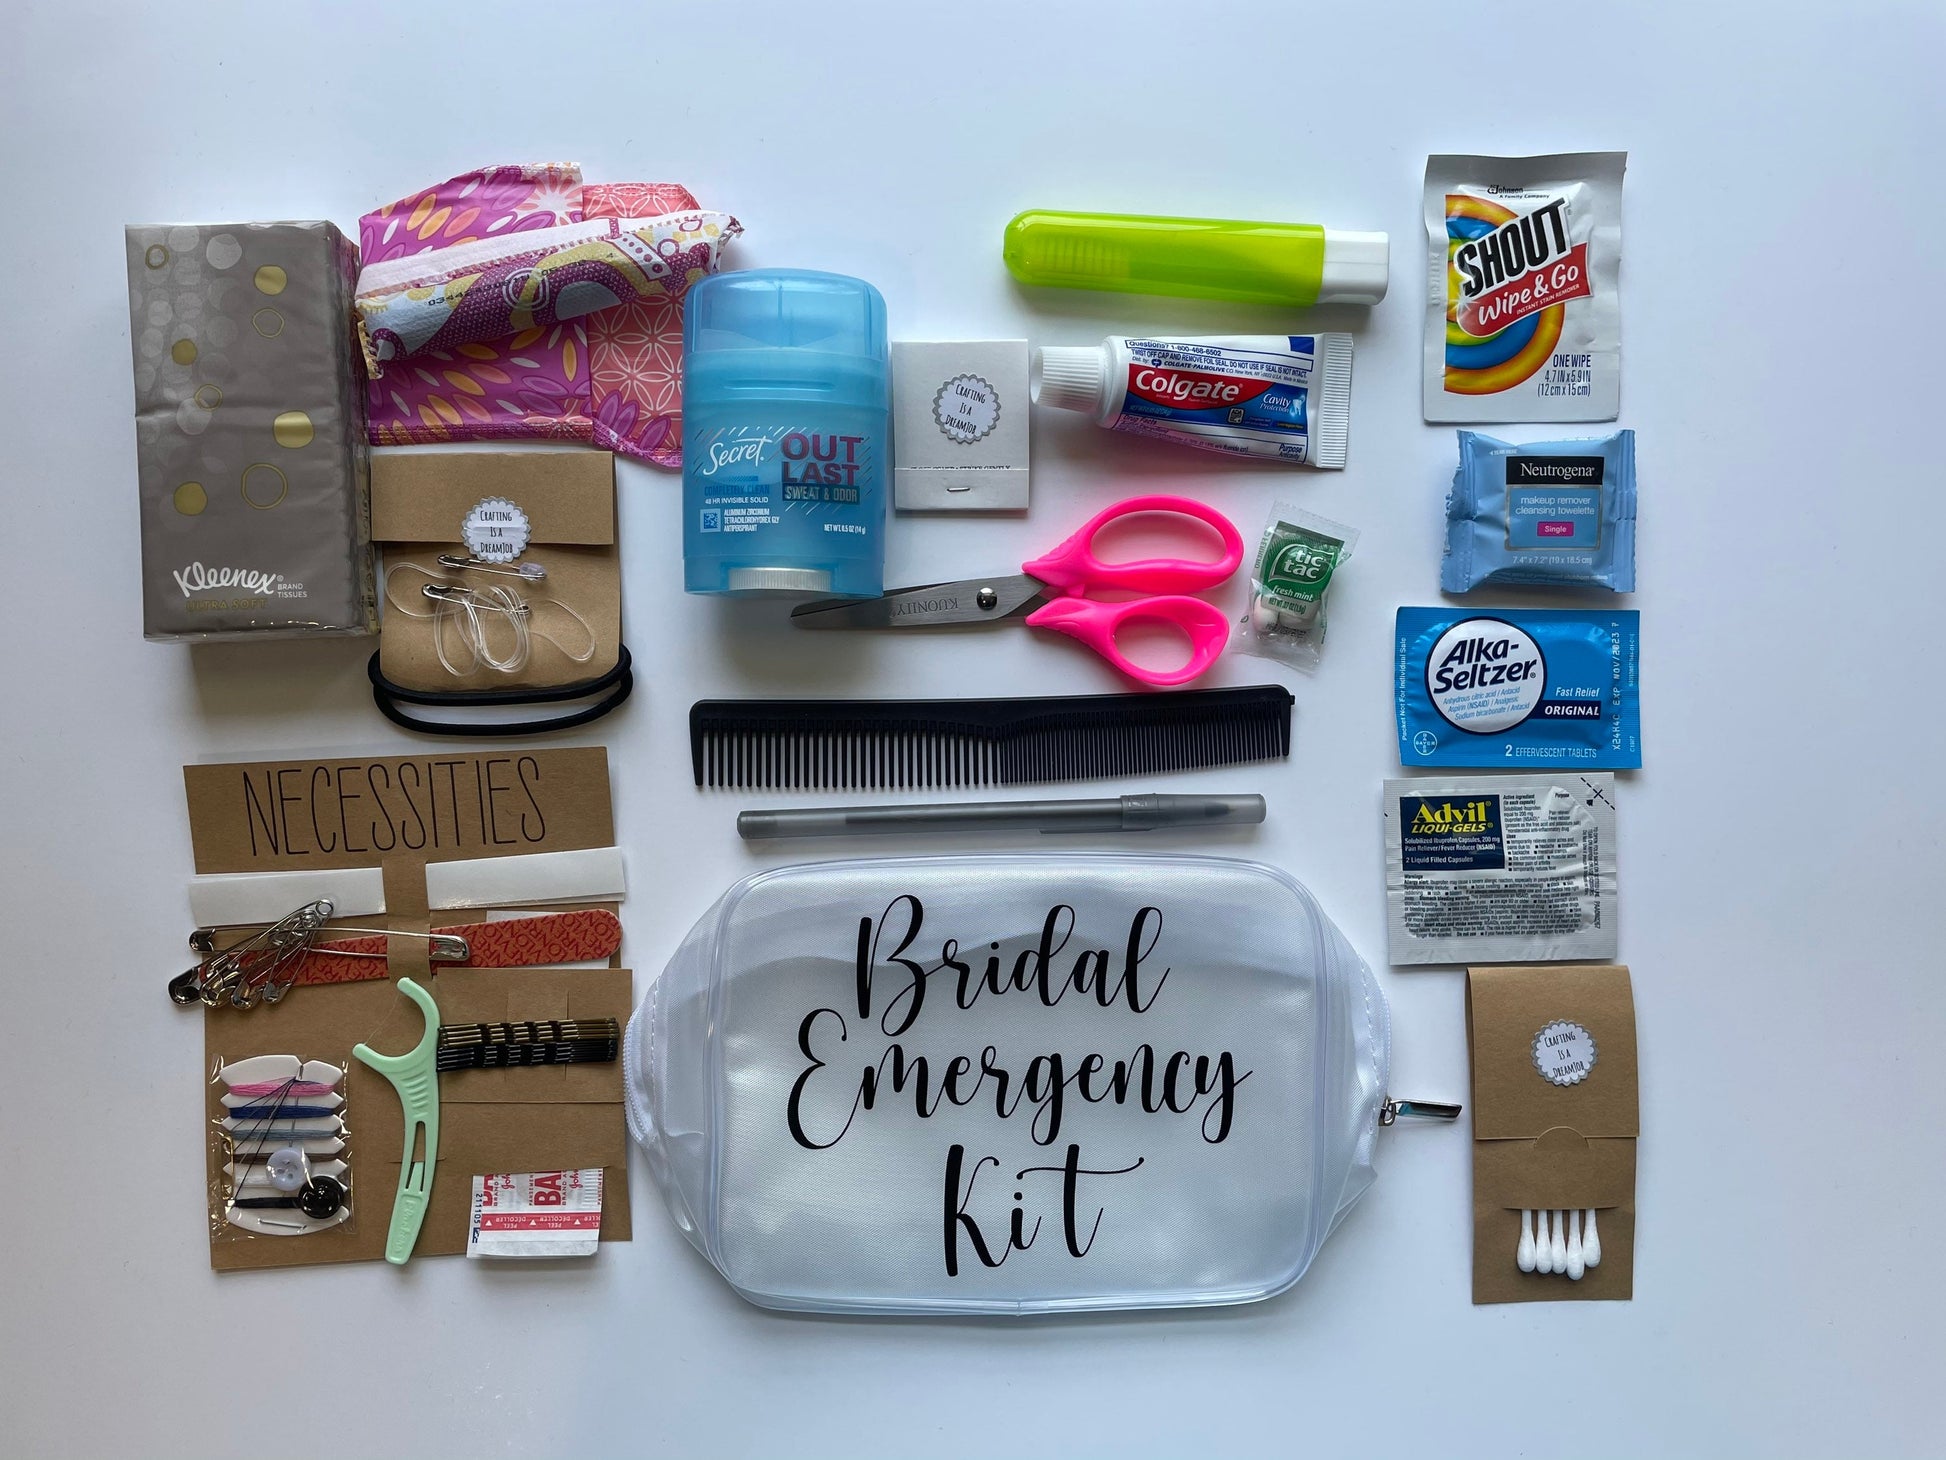 Wedding Day Emergency Kit: Top 10 Items